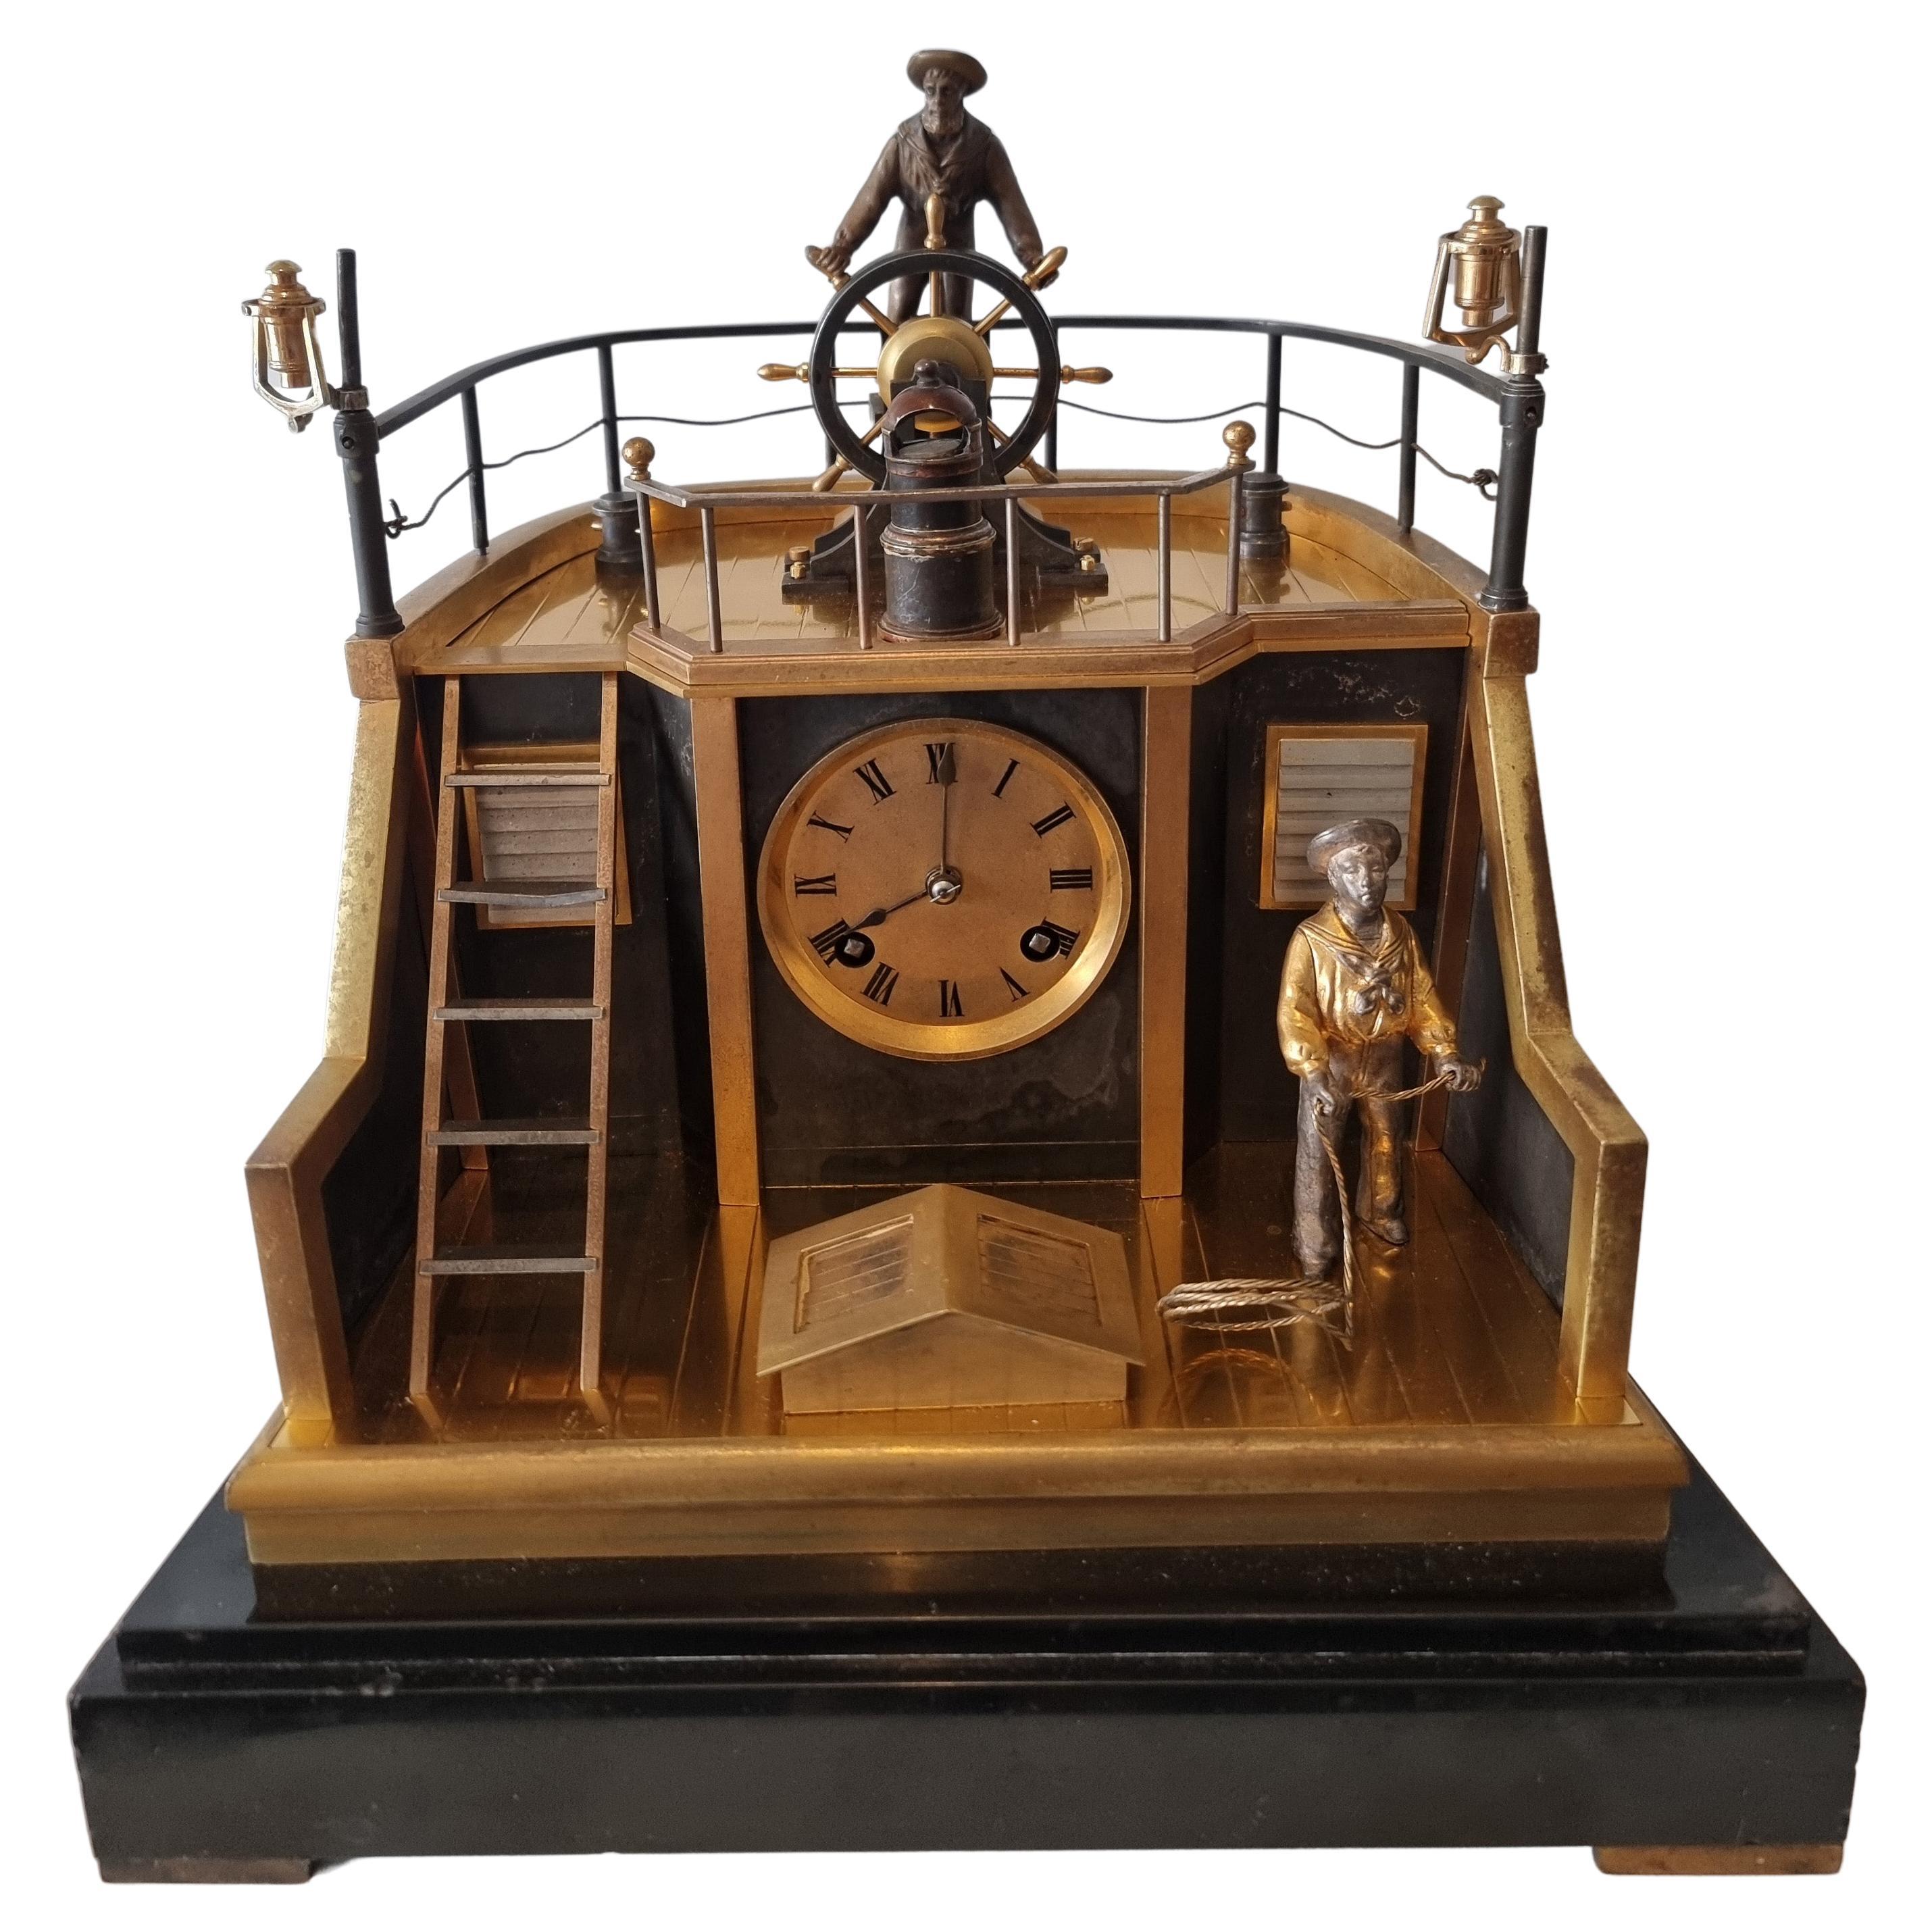 Automaton Industrial series Quarterdeck, Helmsman mantel clock by Guilmet For Sale